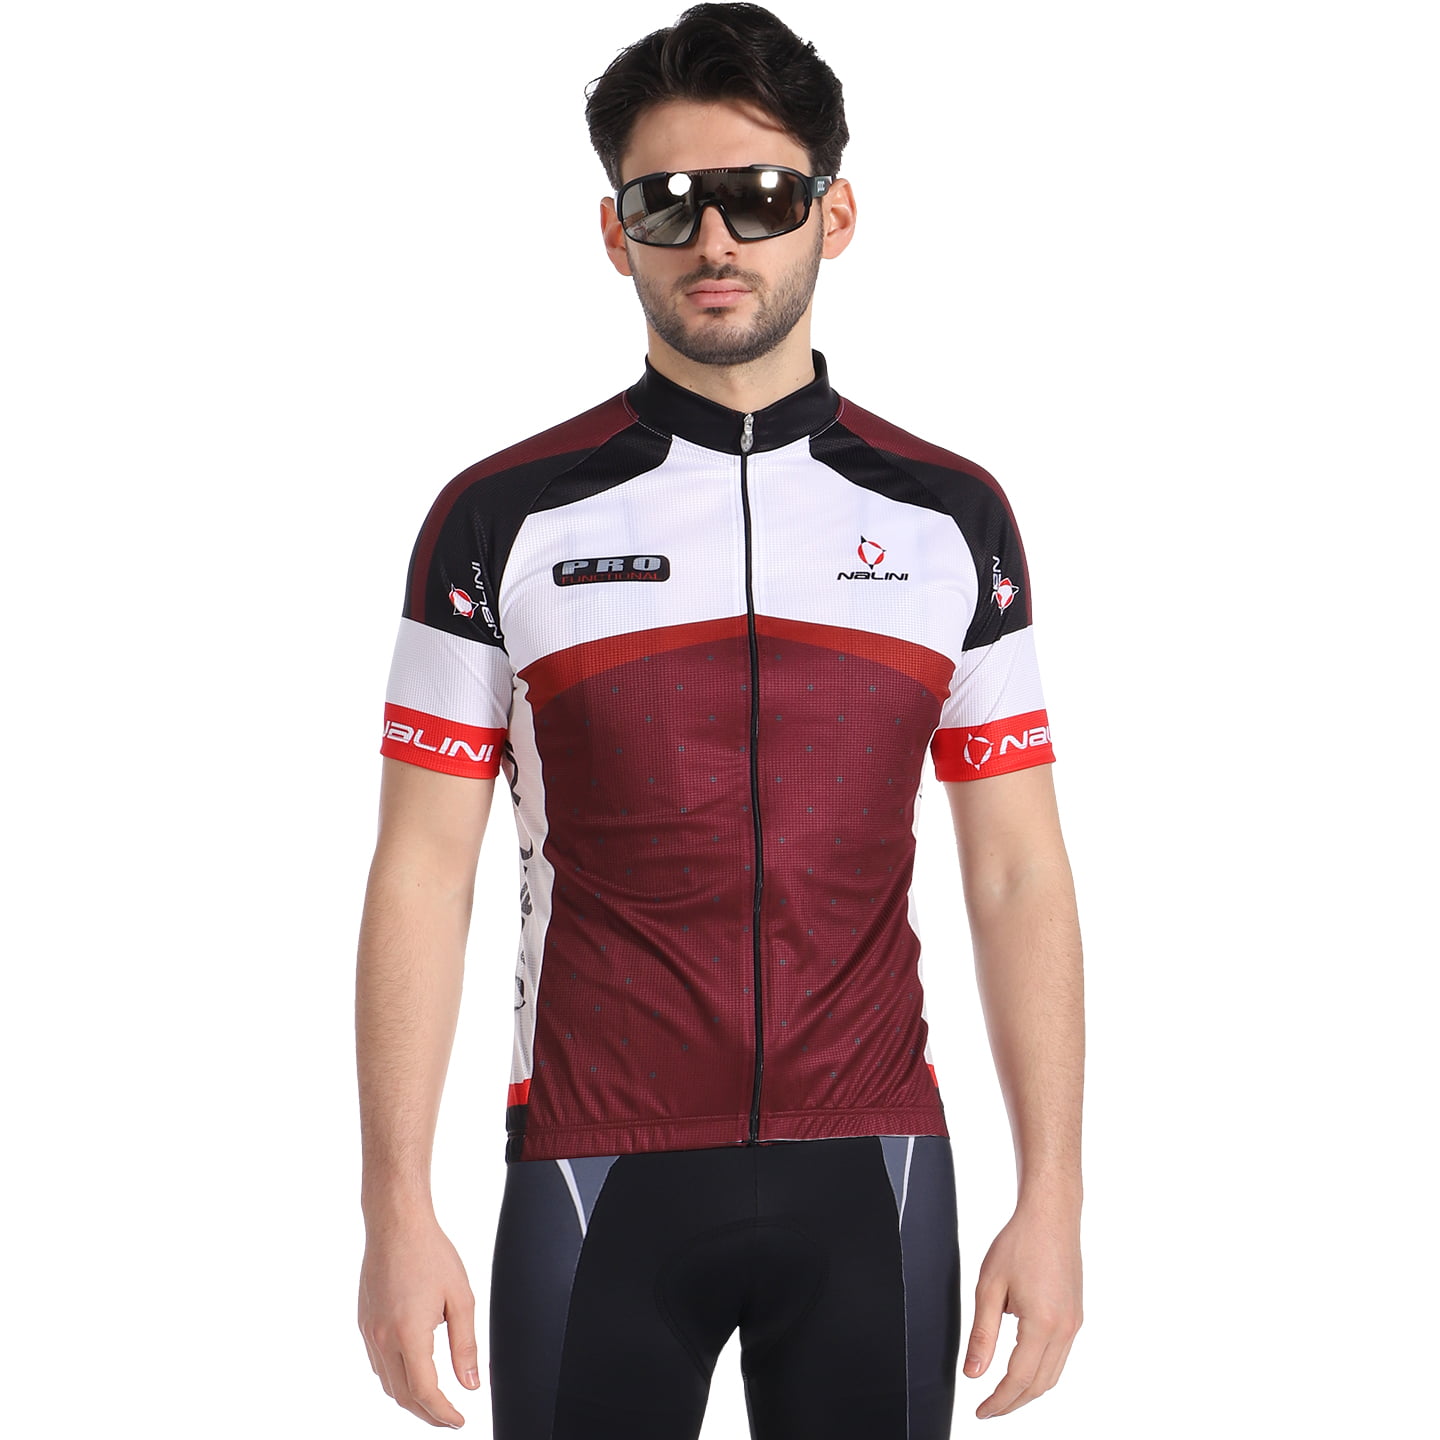 NALINI Ergo 2 Short Sleeve Jersey, for men, size S, Cycling jersey, Cycling clothing